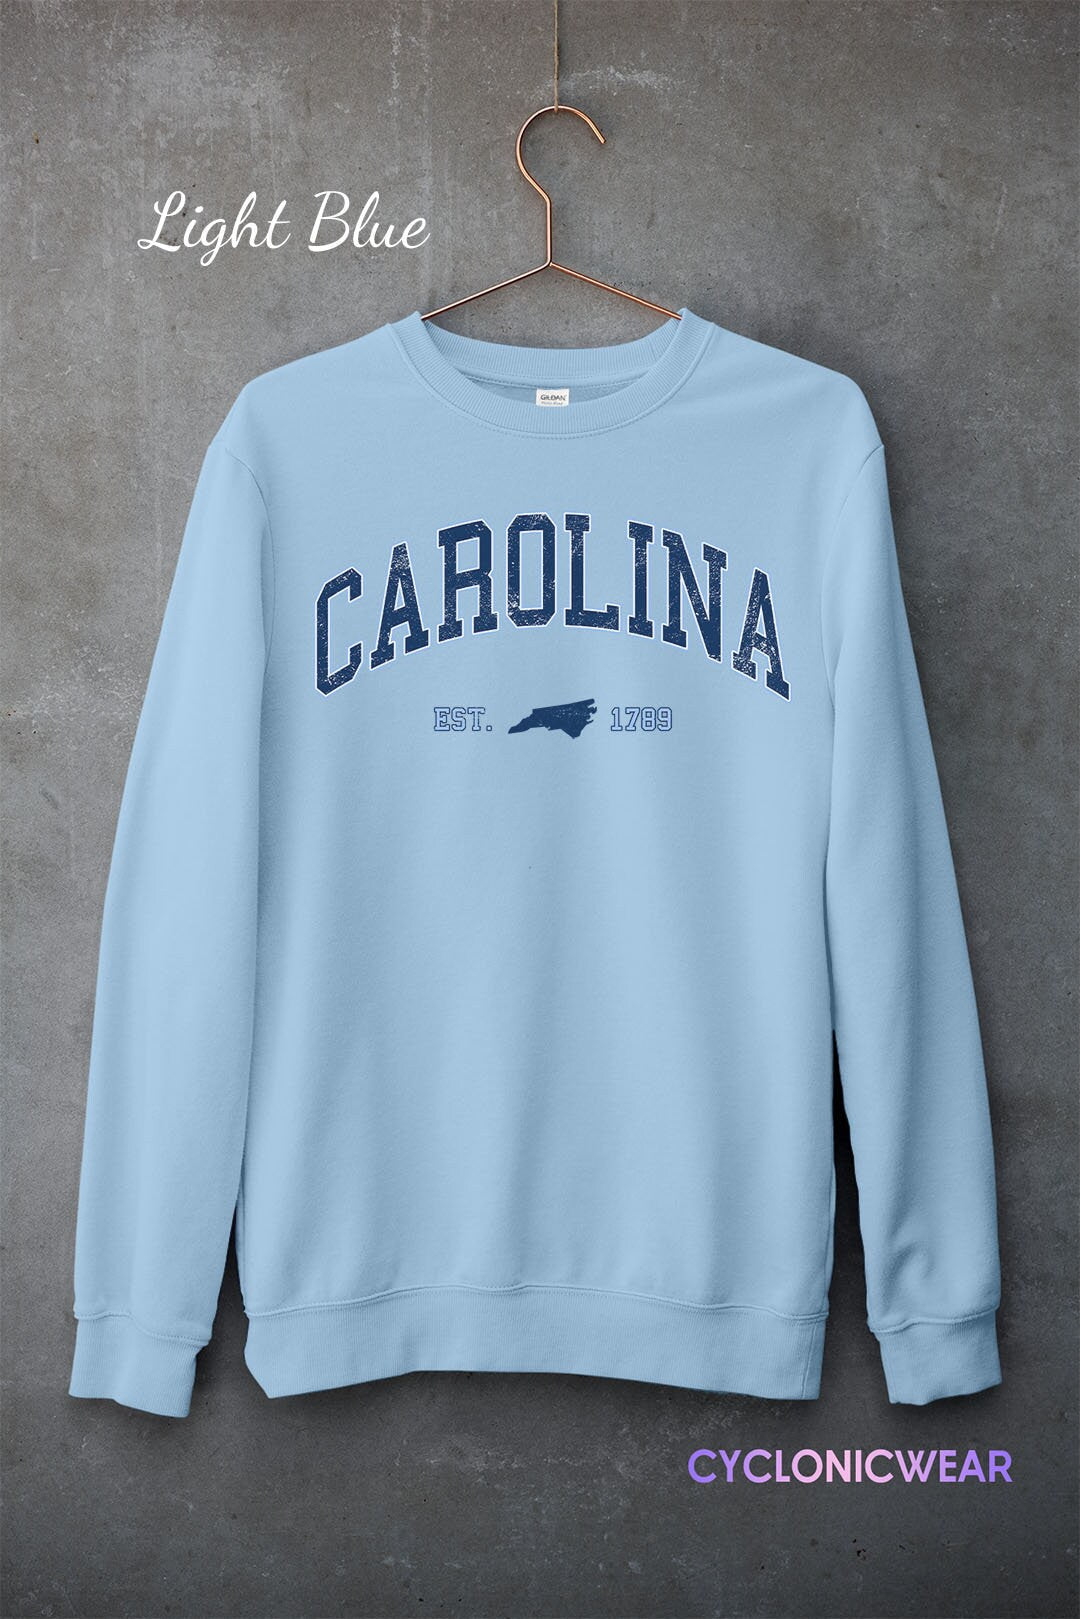 Carolina College Sweatshirt, Vintage Carolina Sweatshirt, Carolina Fan Crewneck, Distressed Carolina Sweatshirt, Carolina Student gift